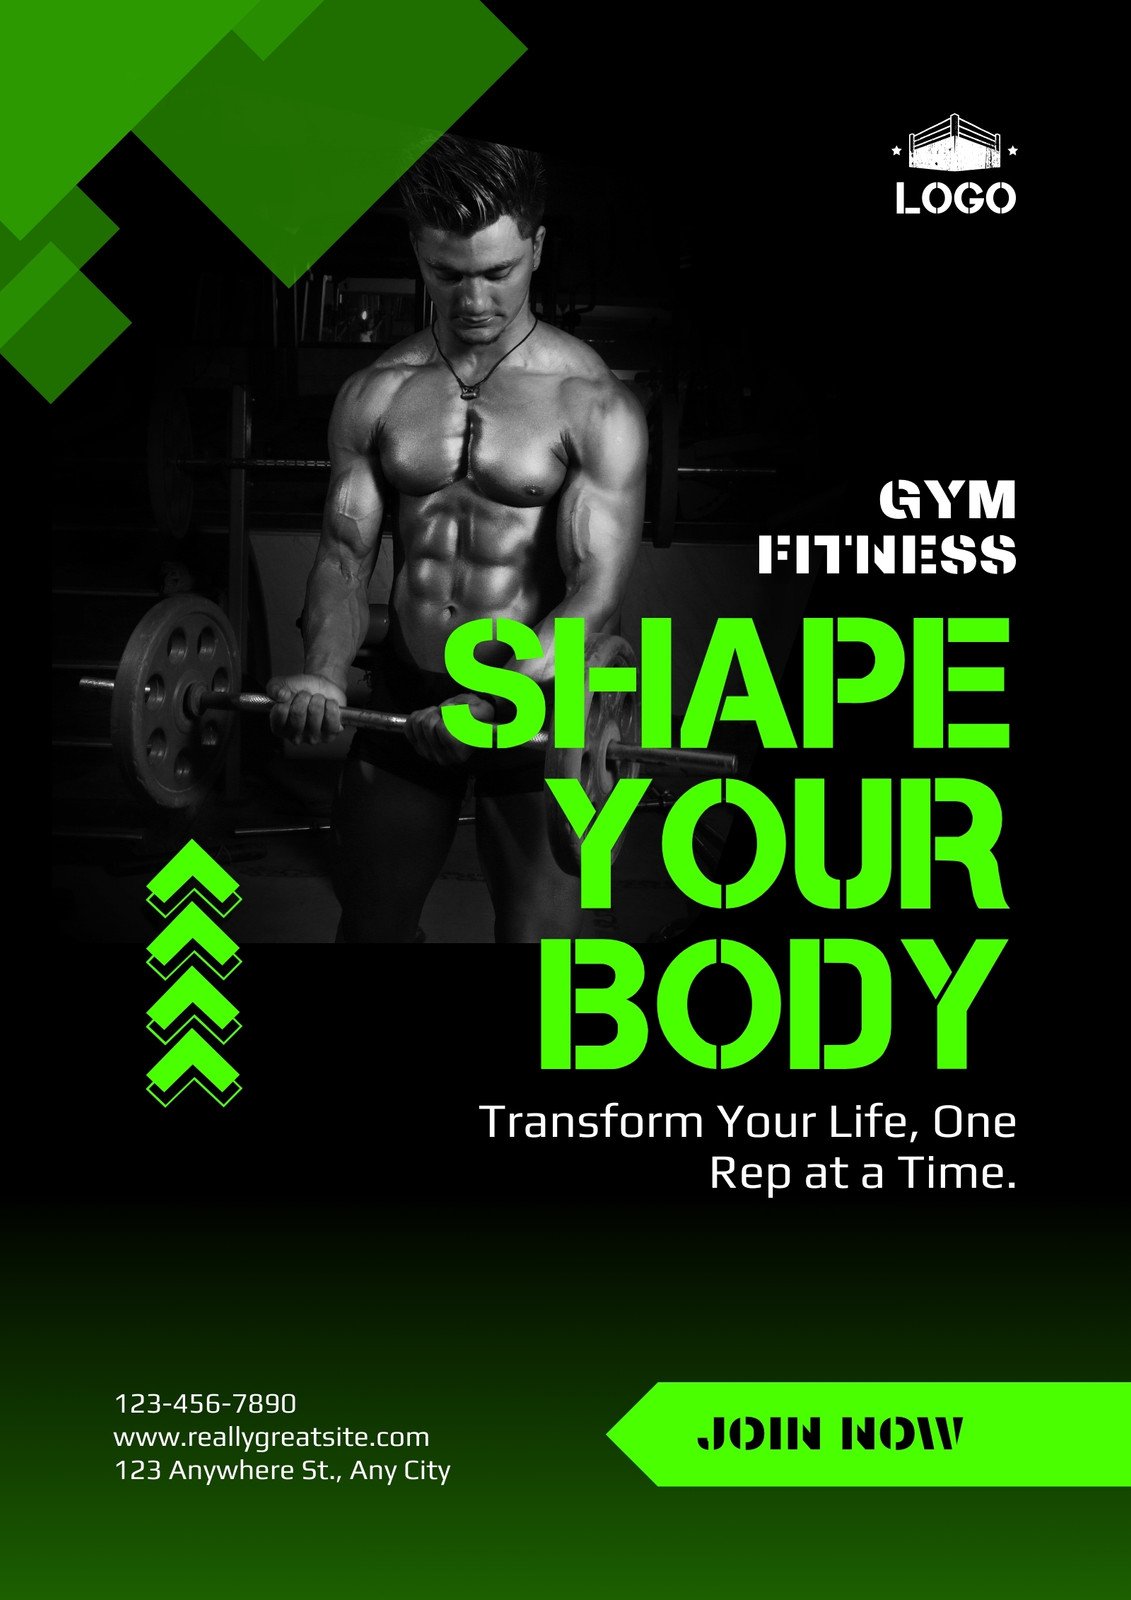 A Kiro Fitness Leaflet Design For Gym